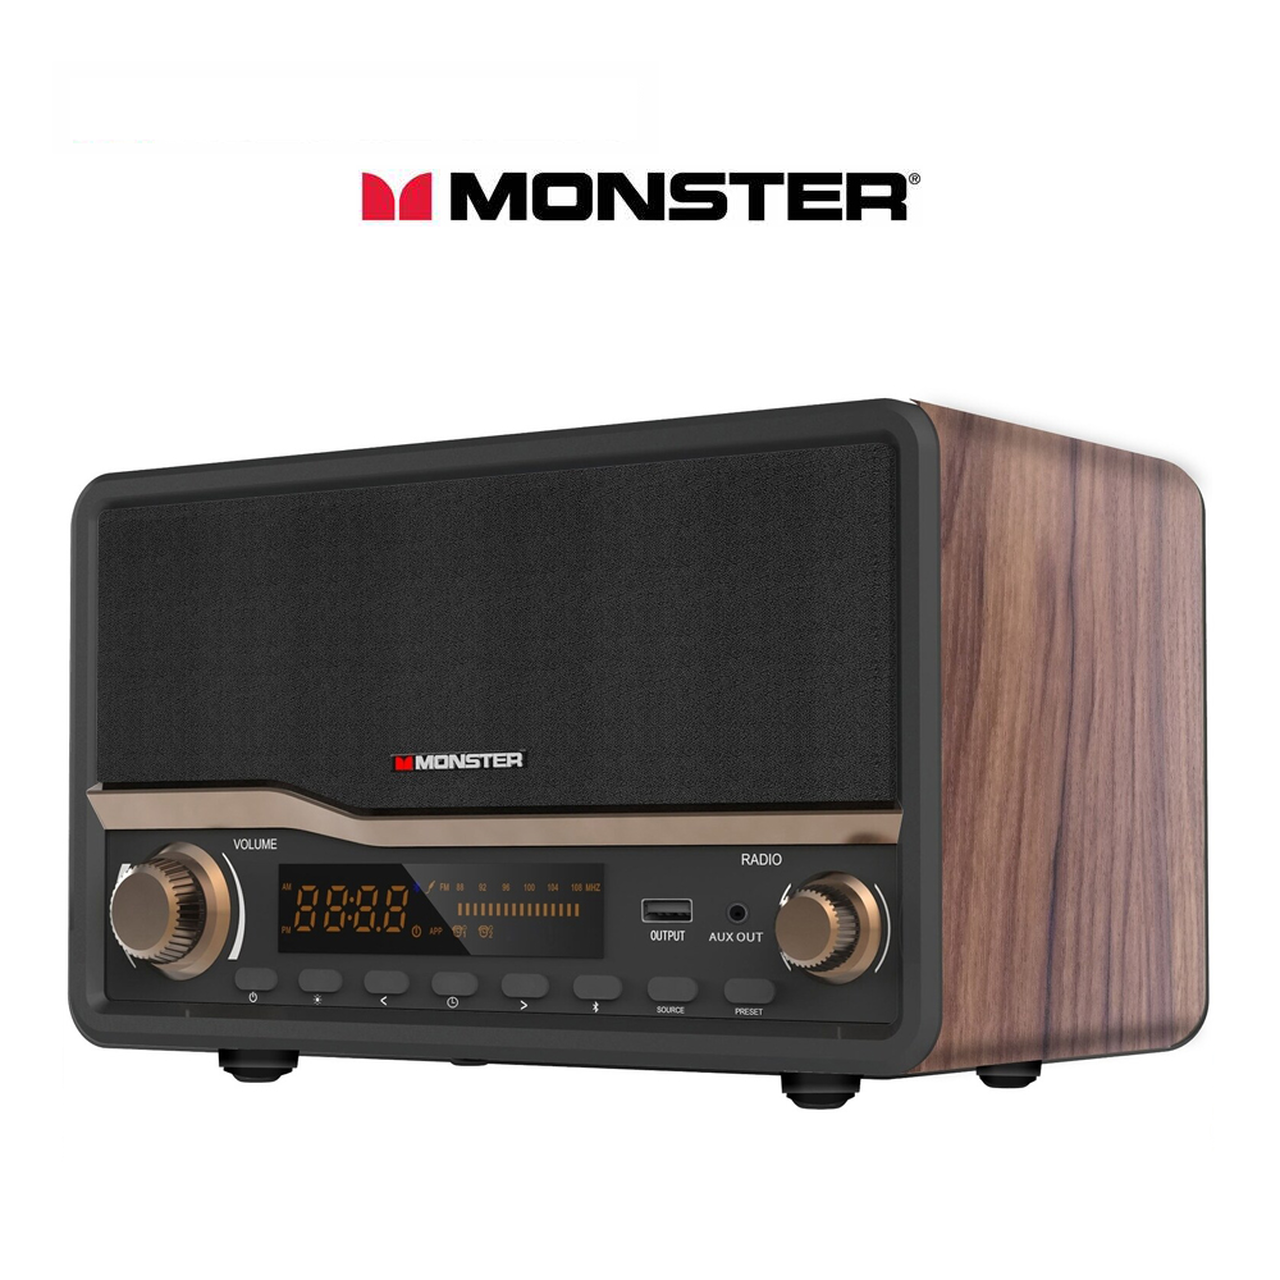 Monster Decora Bluetooth Clock/Radio Lifestyle System - 47% OFF $79.99